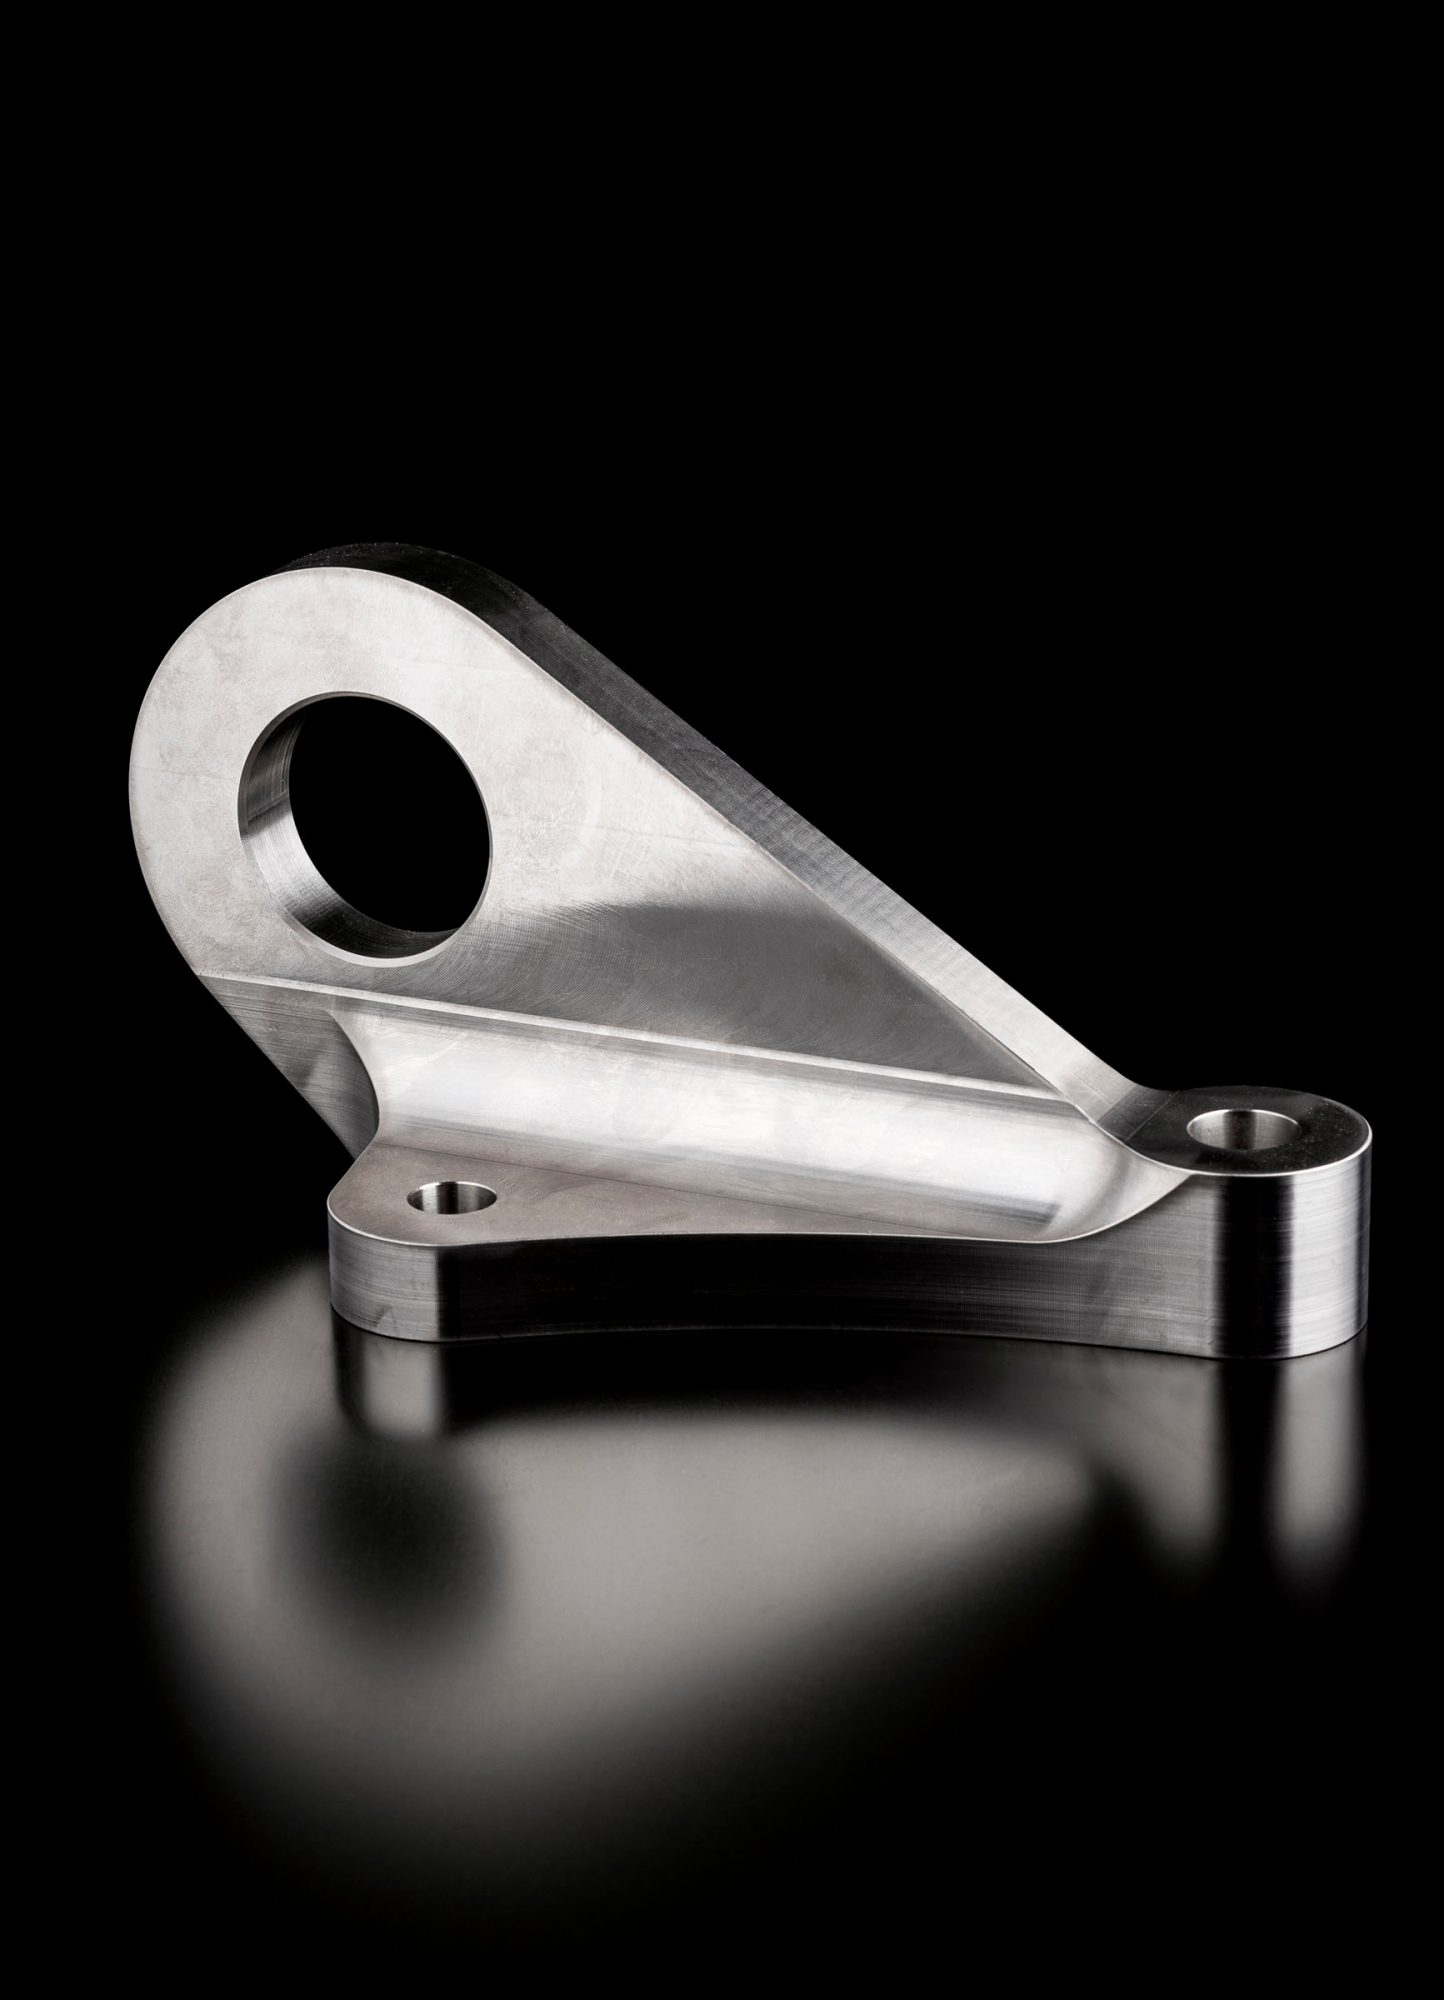 Bracket made from titanium for aerospace